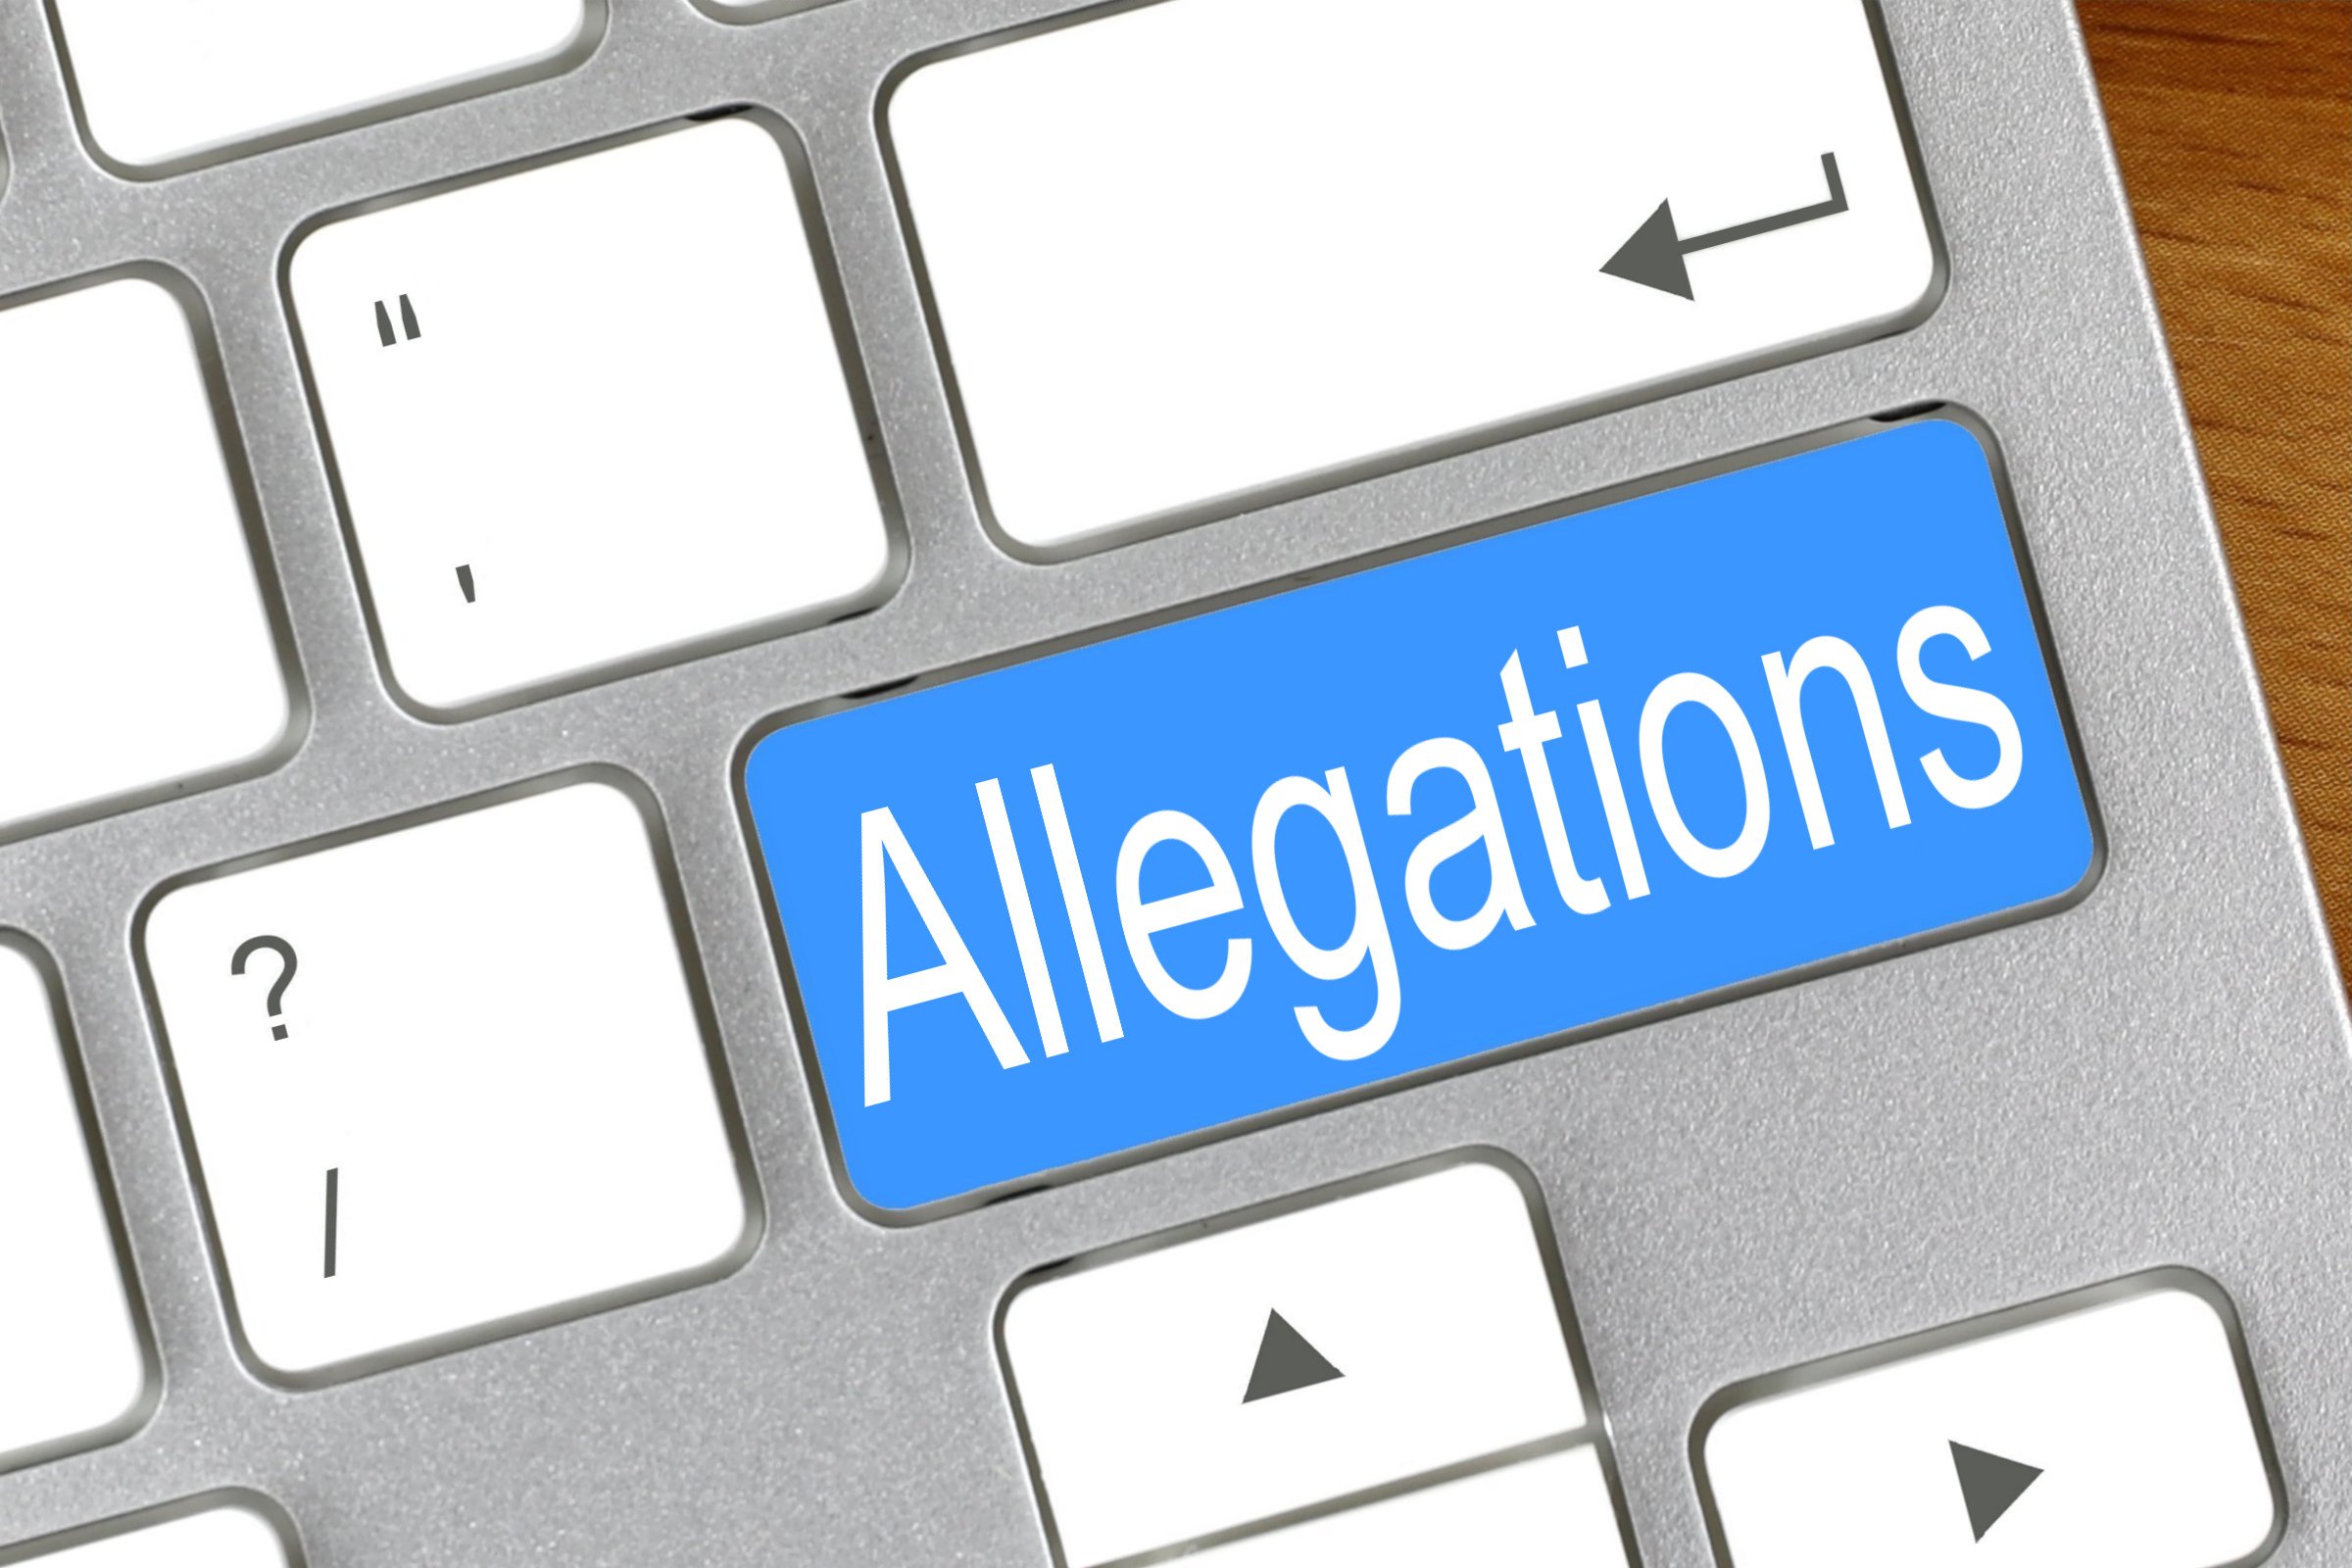 allegations